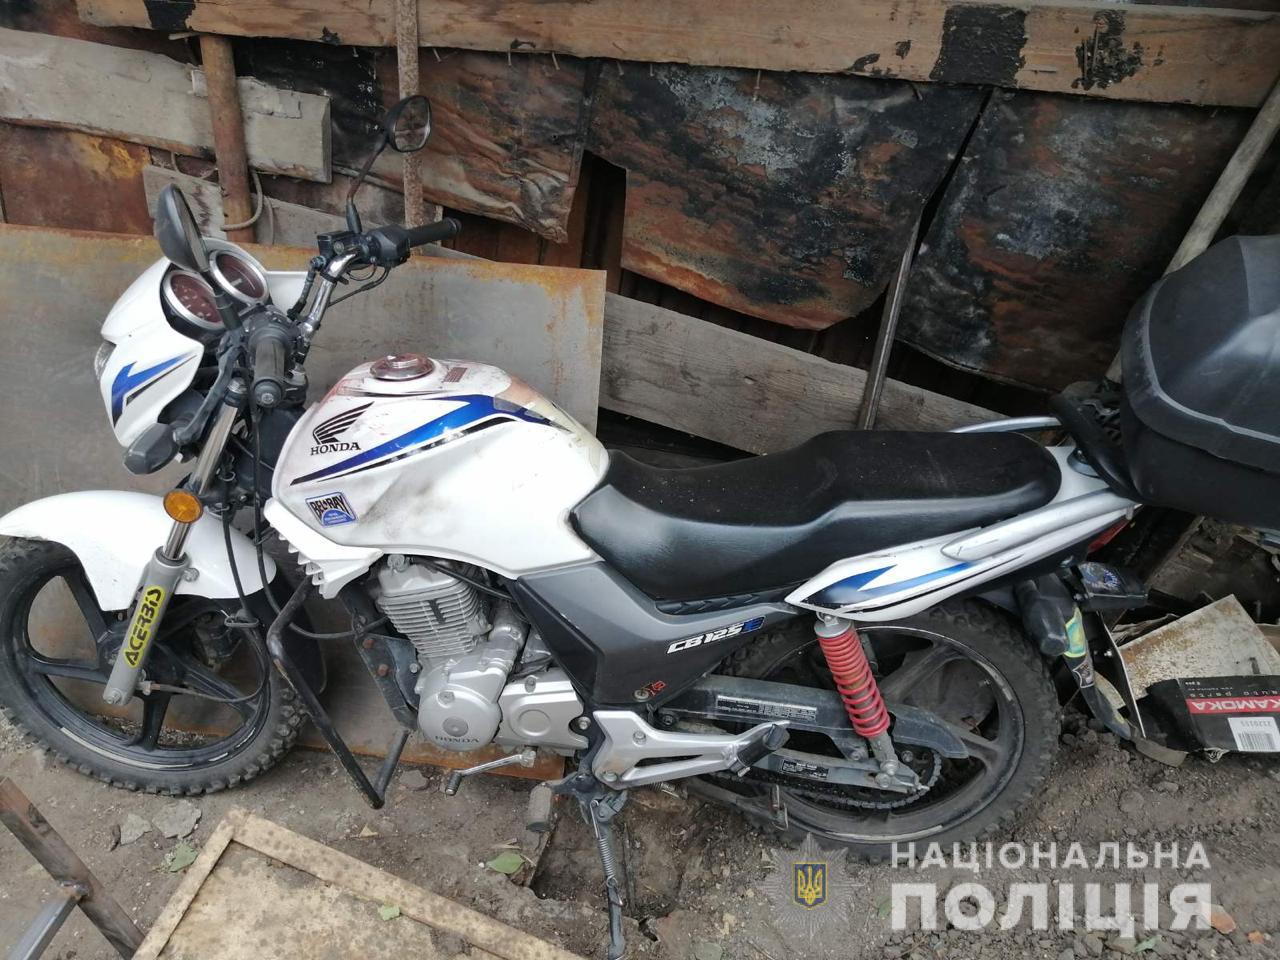 В центре Харькова угнали мотоцикл